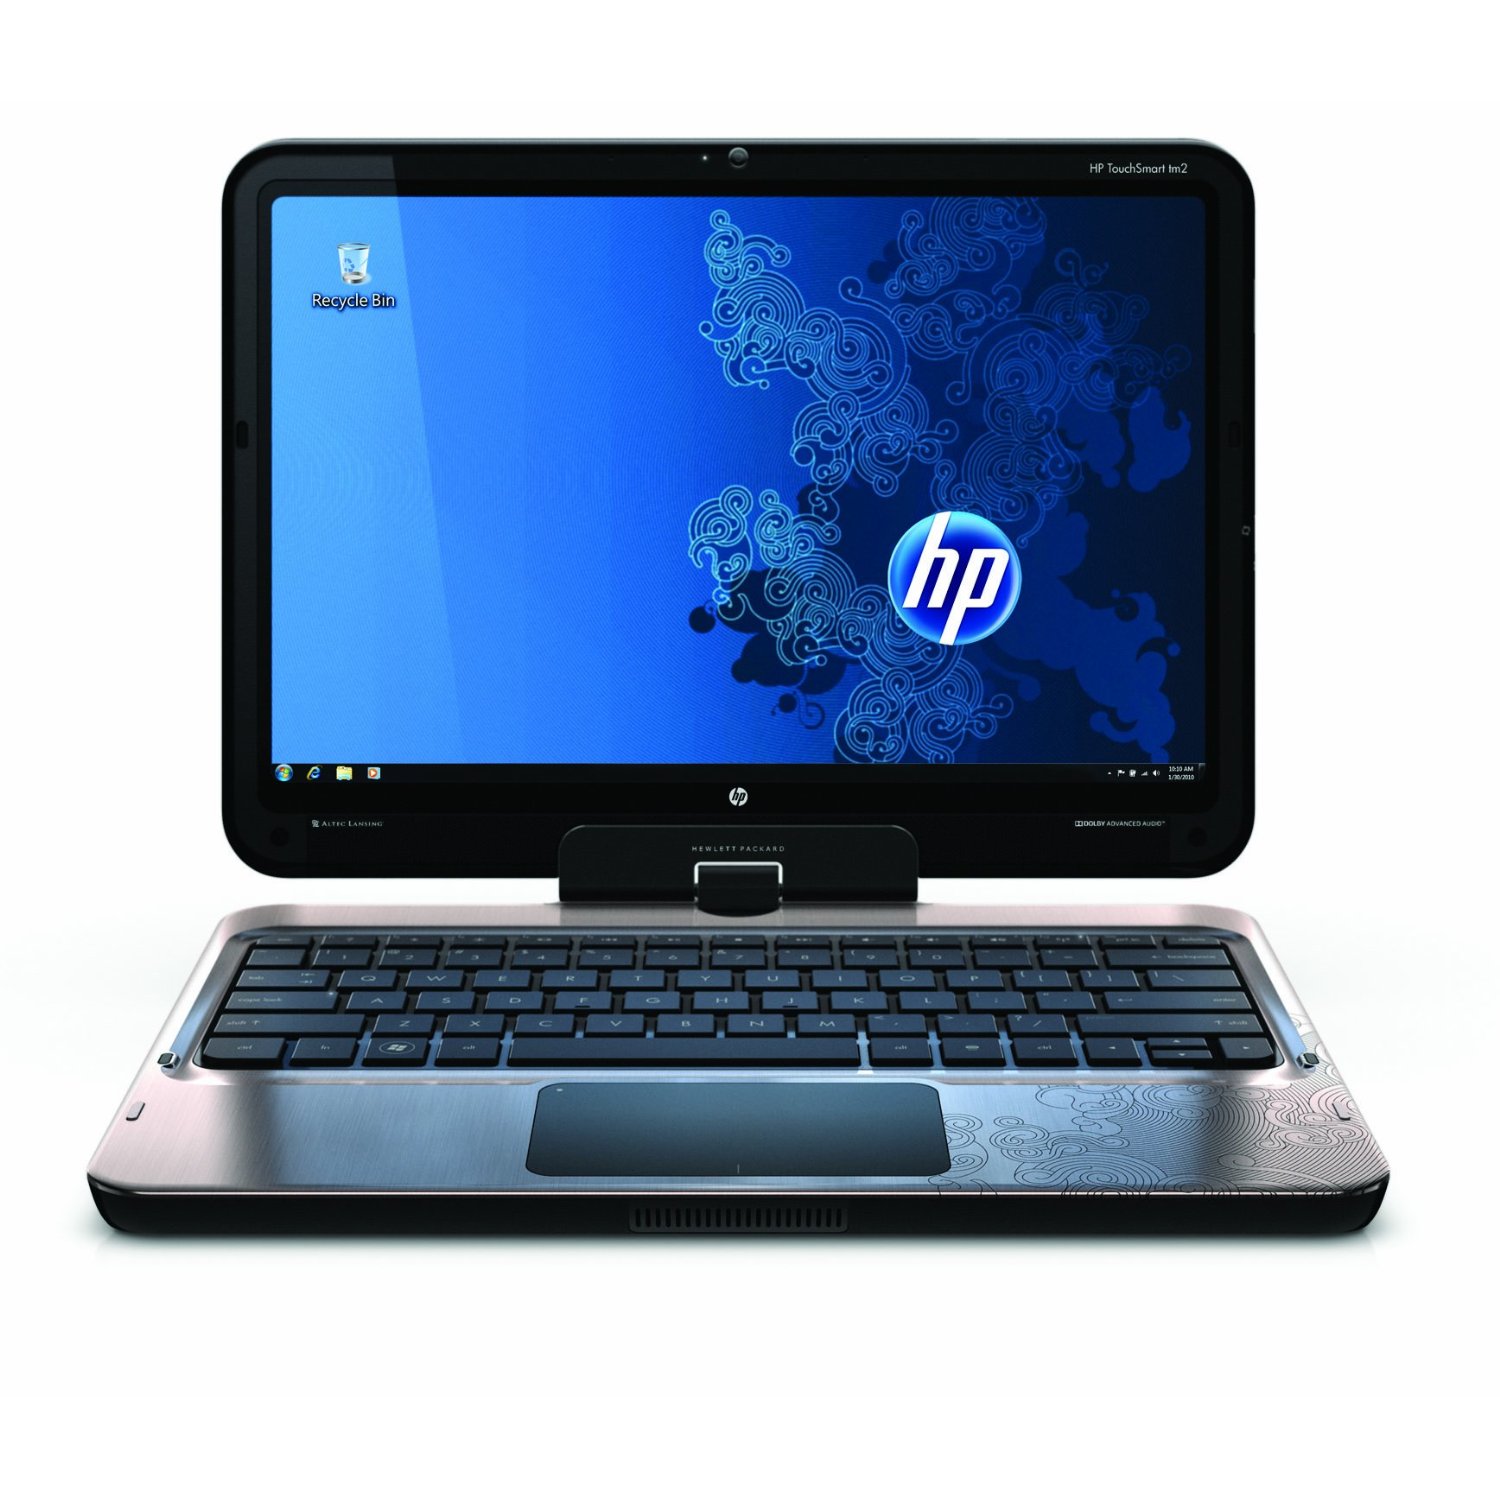 http://thetechjournal.com/wp-content/uploads/images/1107/1312084315-hp-touchsmart-tm21070us-121inch-riptide-argento-laptop--1.jpg